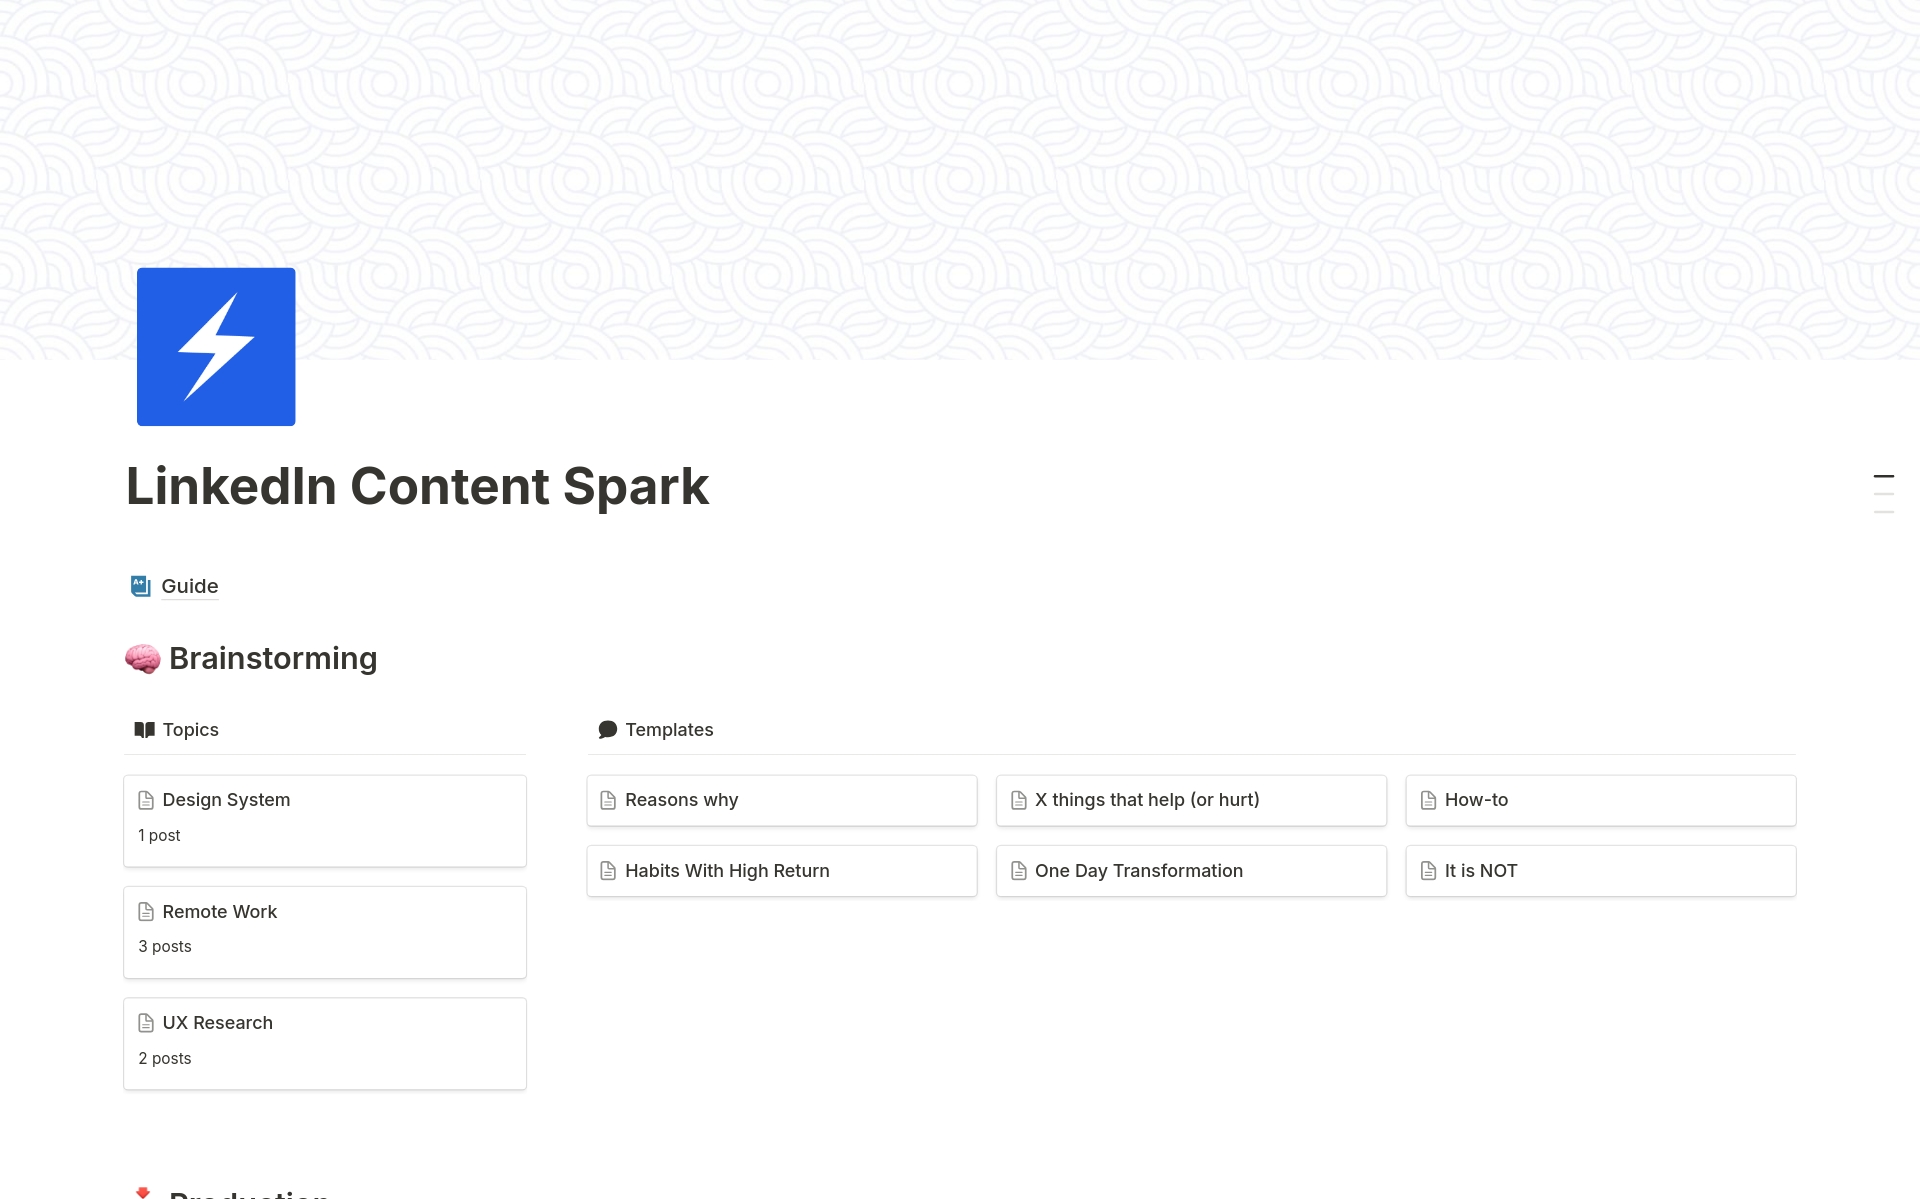 Vista previa de plantilla para LinkedIn Content Spark